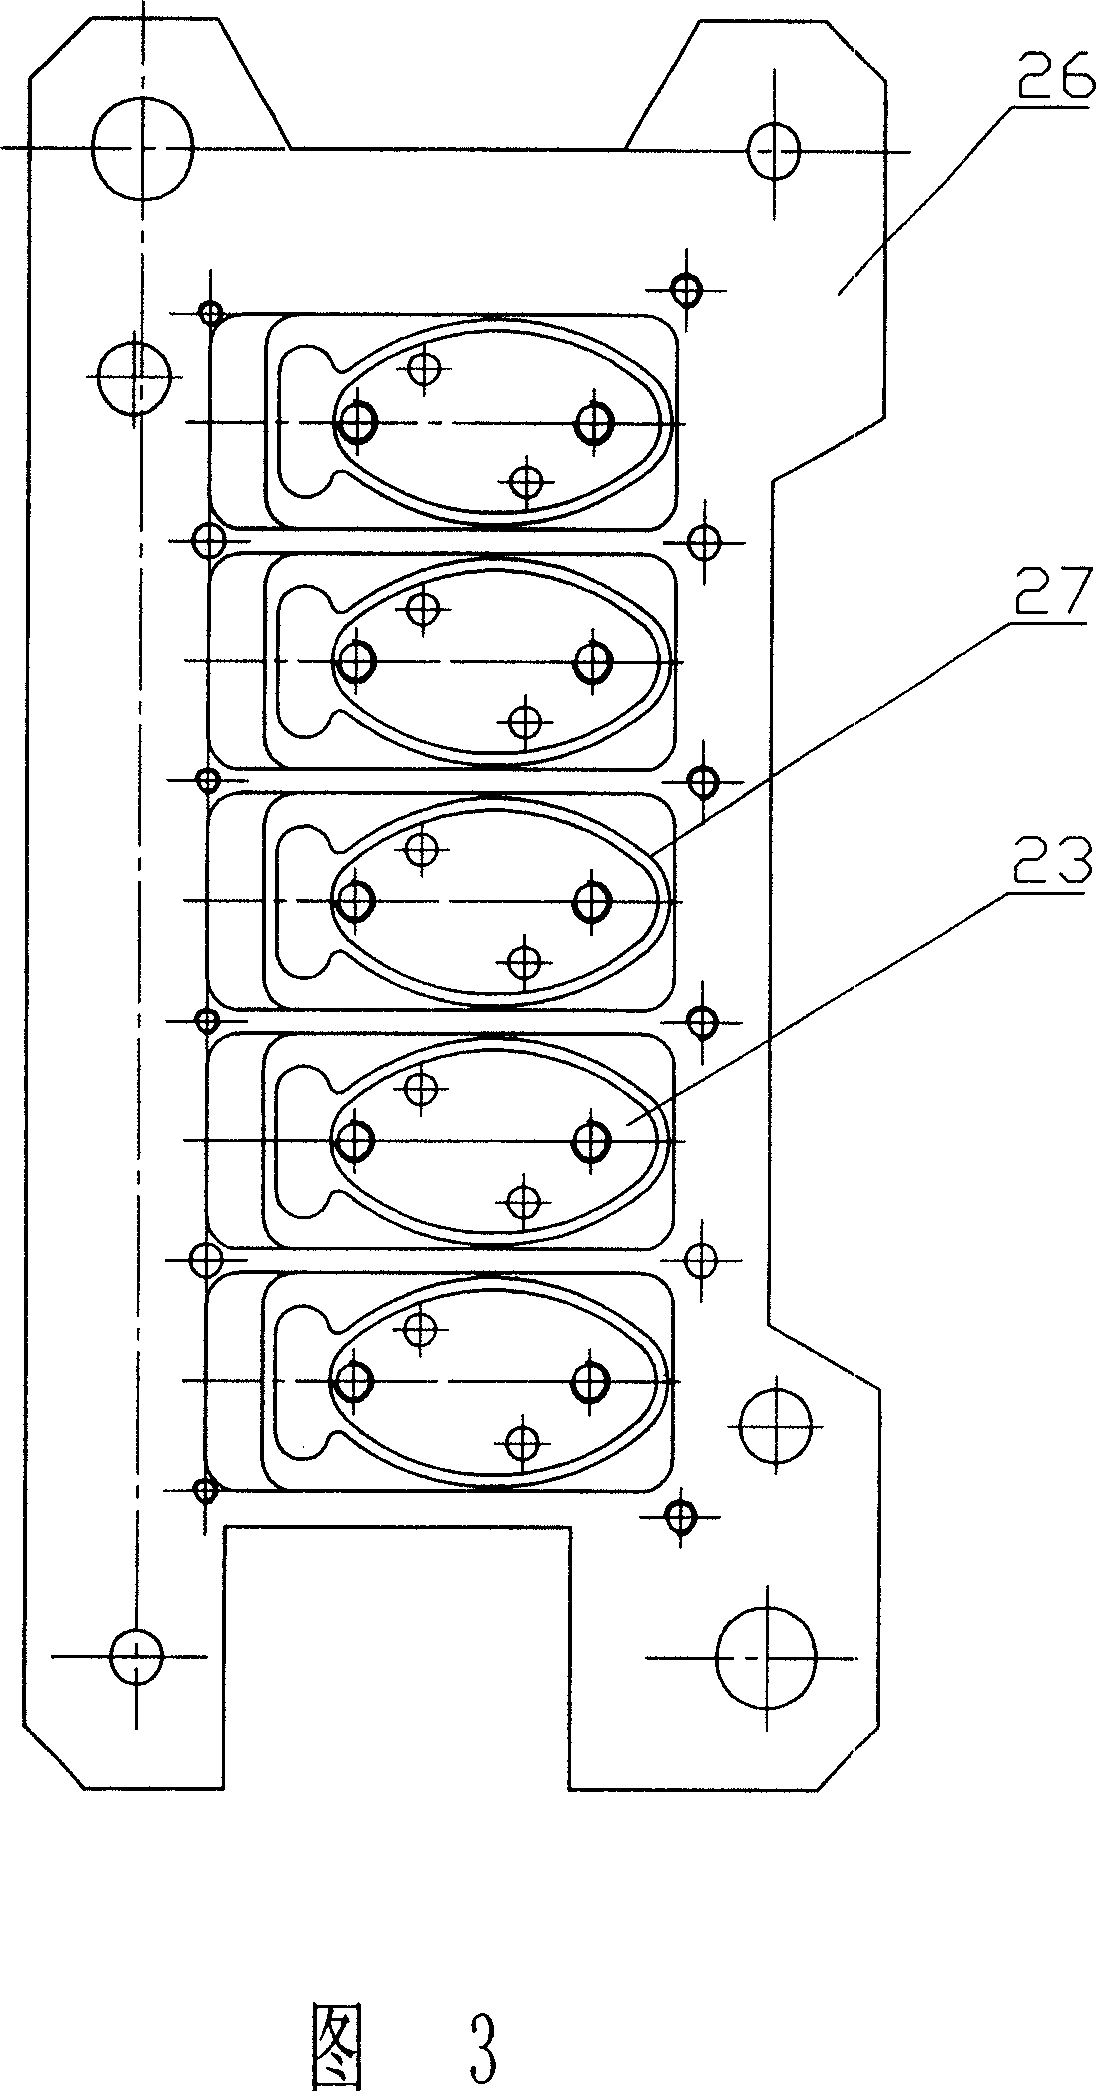 Independent die cutting apparatus for liquid filling machine